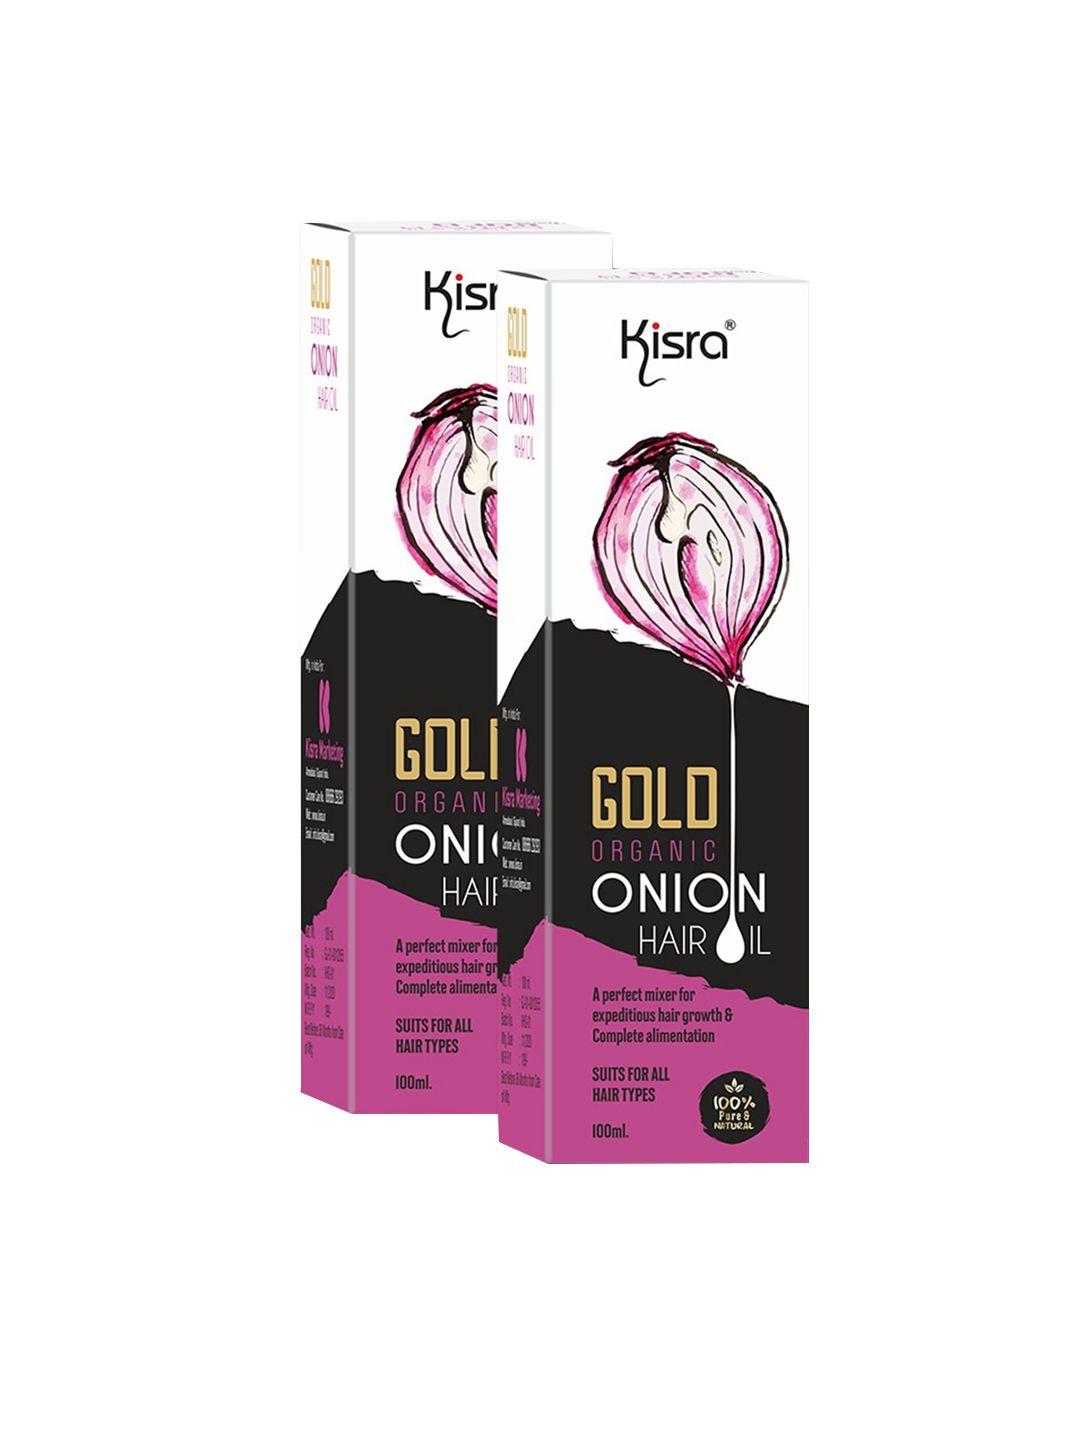 kisra set of 2 gold organic onion hair oil for hair growth & hairfall control - 100ml each